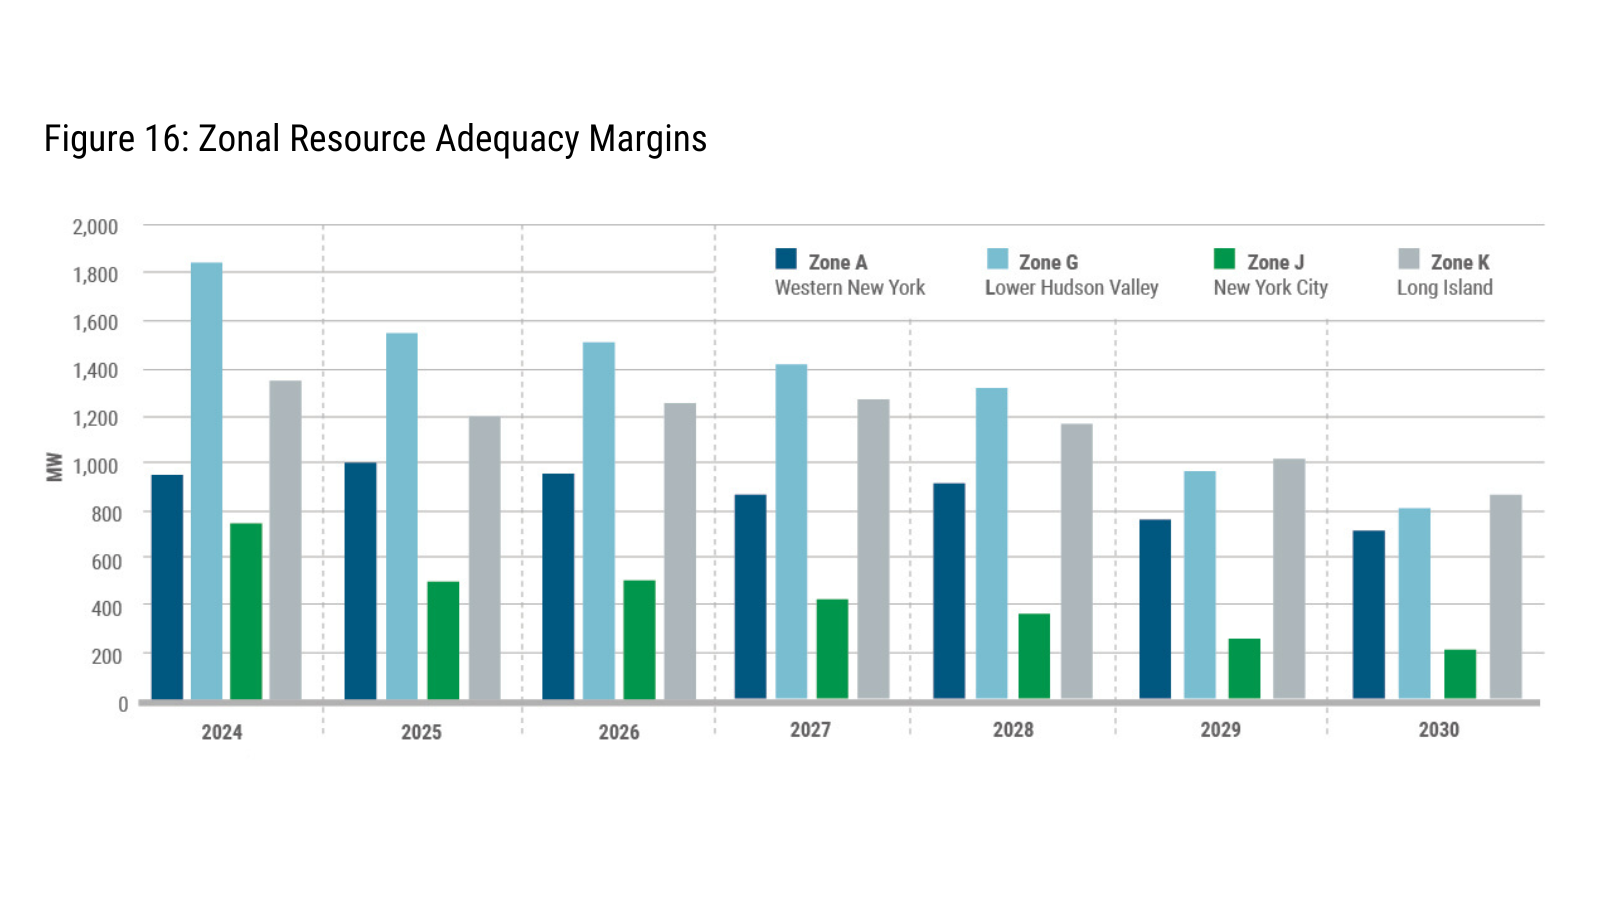 SOURCE: Power Trends 2022, Figure 16: Zonal Resource Adequacy Margins